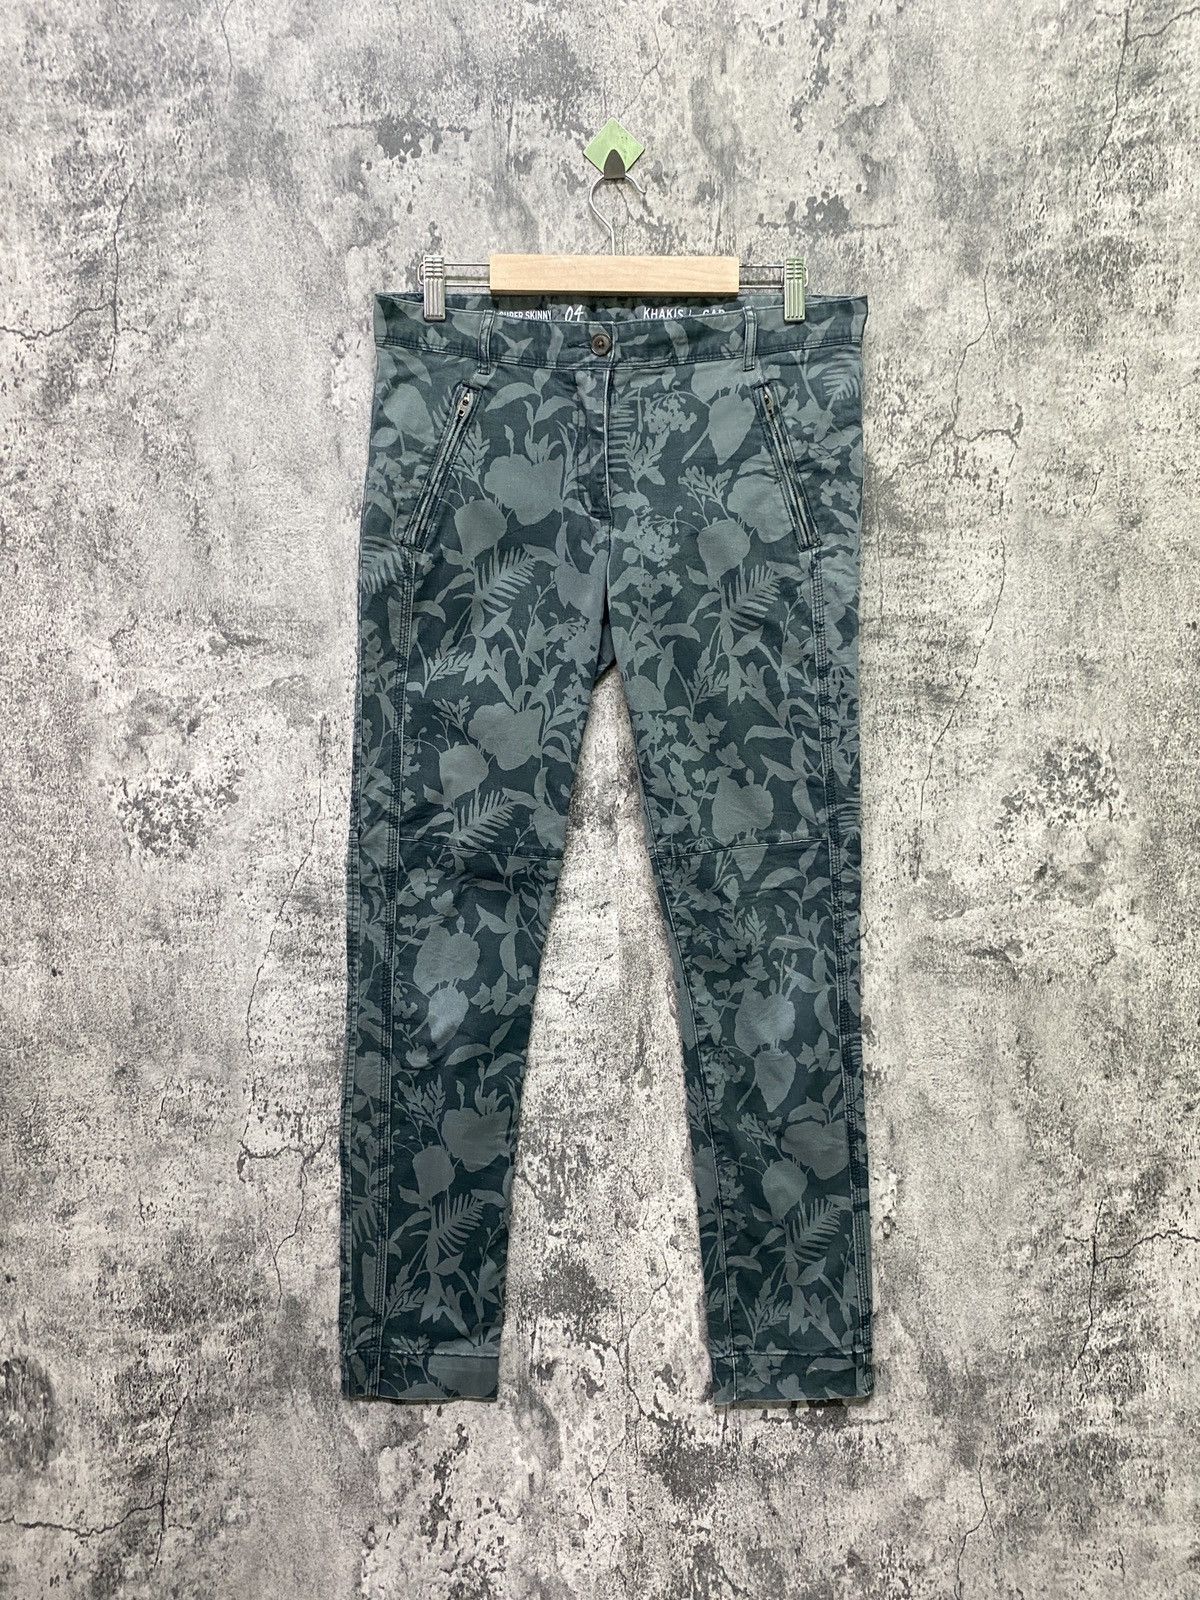 Gap Khakis By Gap Japan Made Super Skinny Floral Design Pants | Grailed